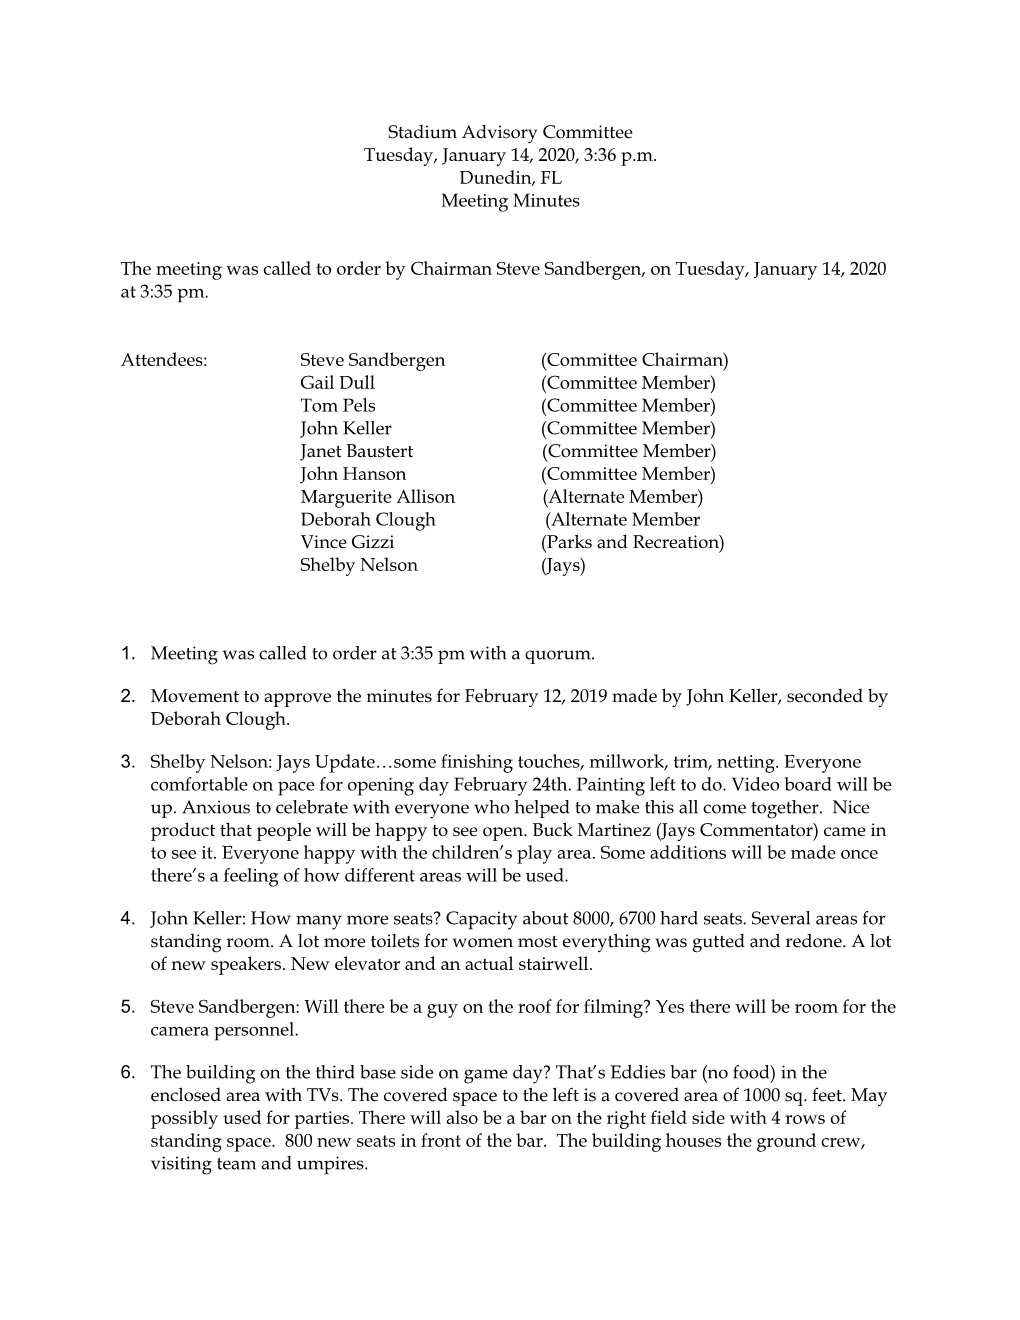 Stadium Advisory Committee Tuesday, January 14, 2020, 3:36 P.M. Dunedin, FL Meeting Minutes